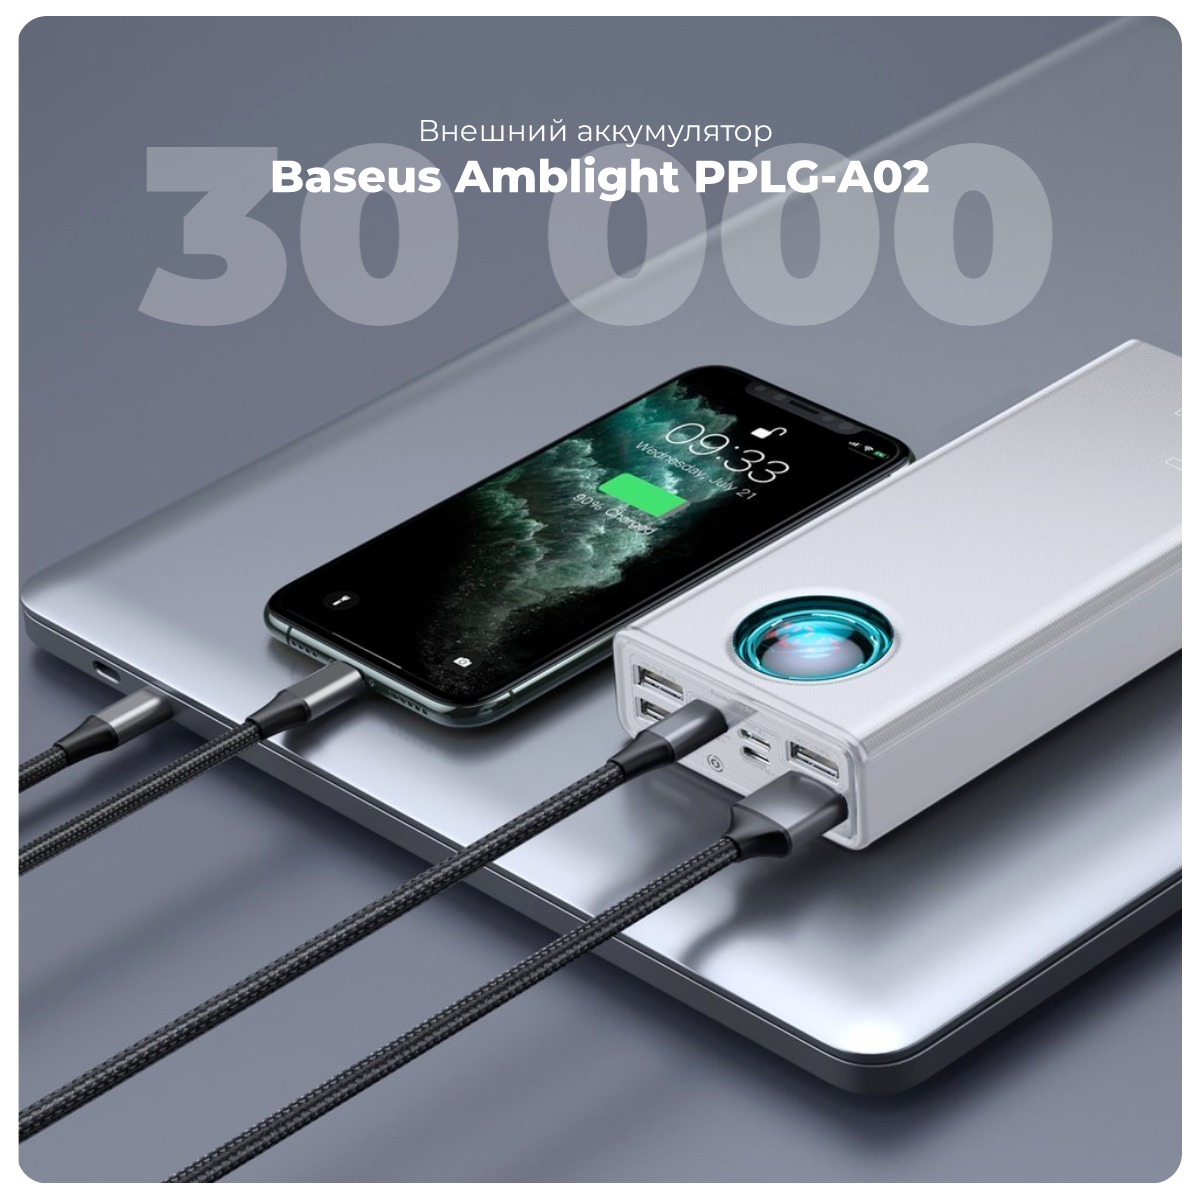 Baseus-Amblight-Digital-Display-Quick-Charge-65W-30000-mAh-PPLG-A02-01